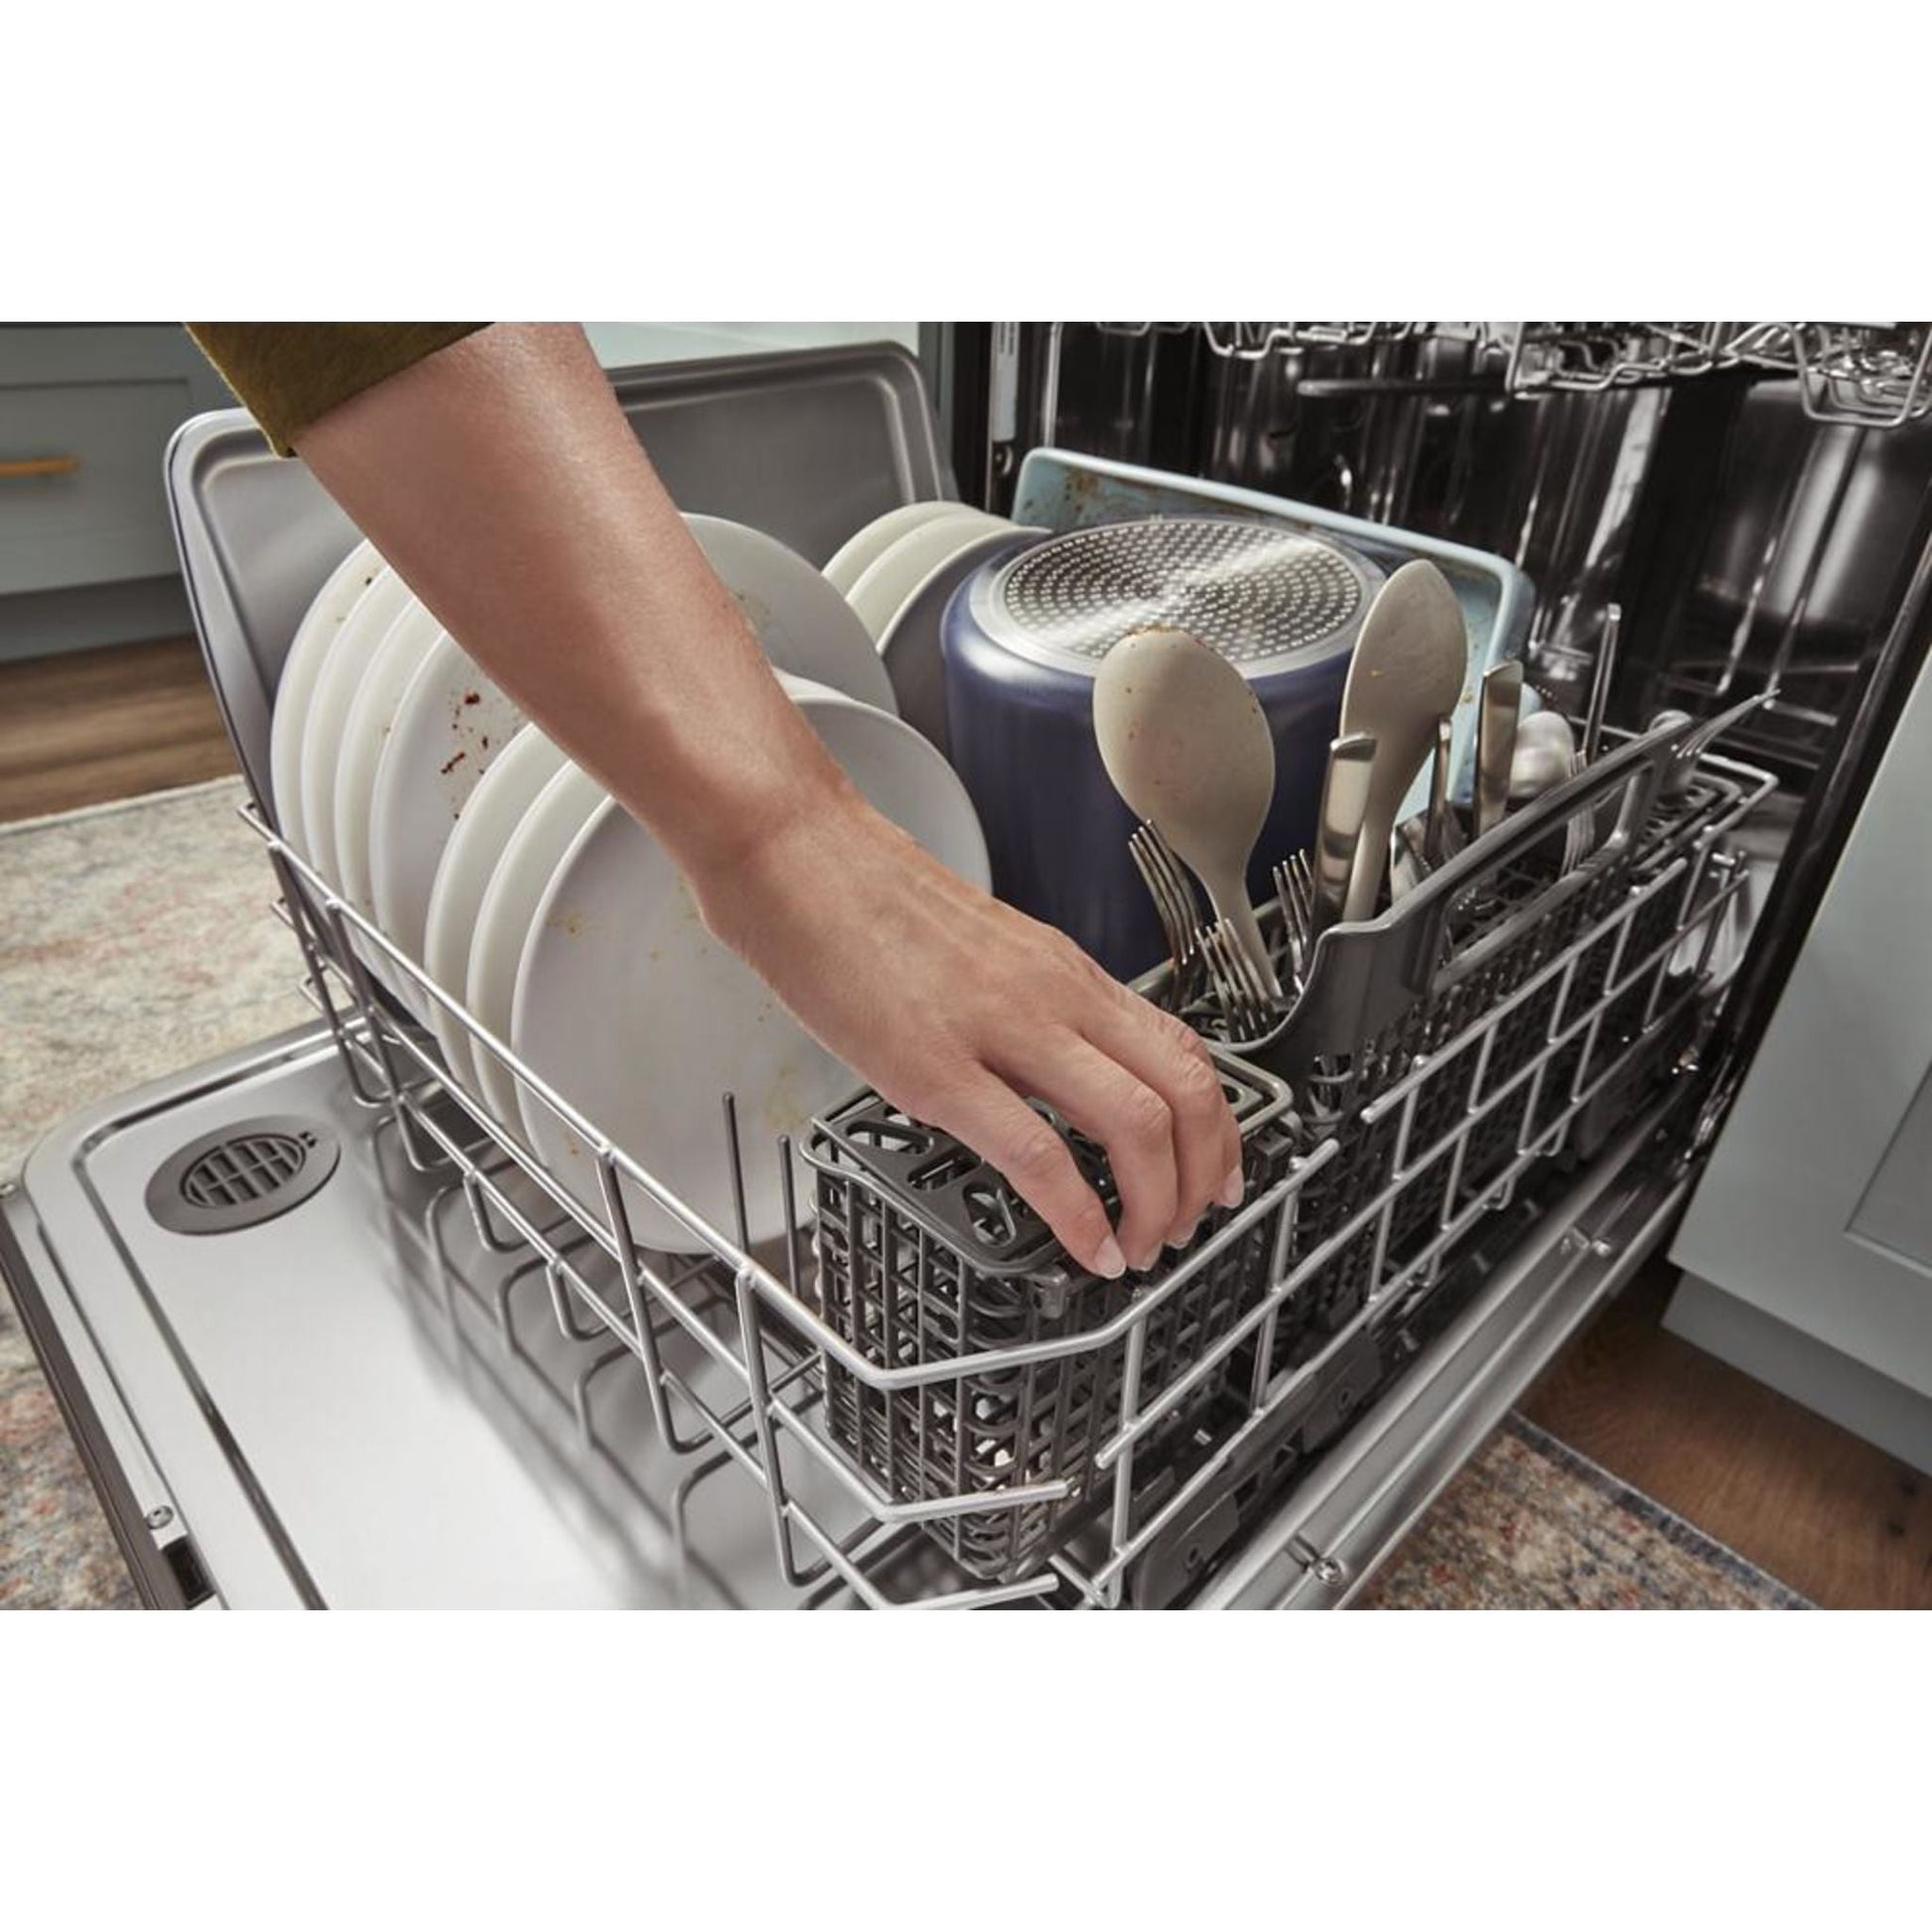 Whirlpool Dishwasher (WDT740SALW) - WHITE